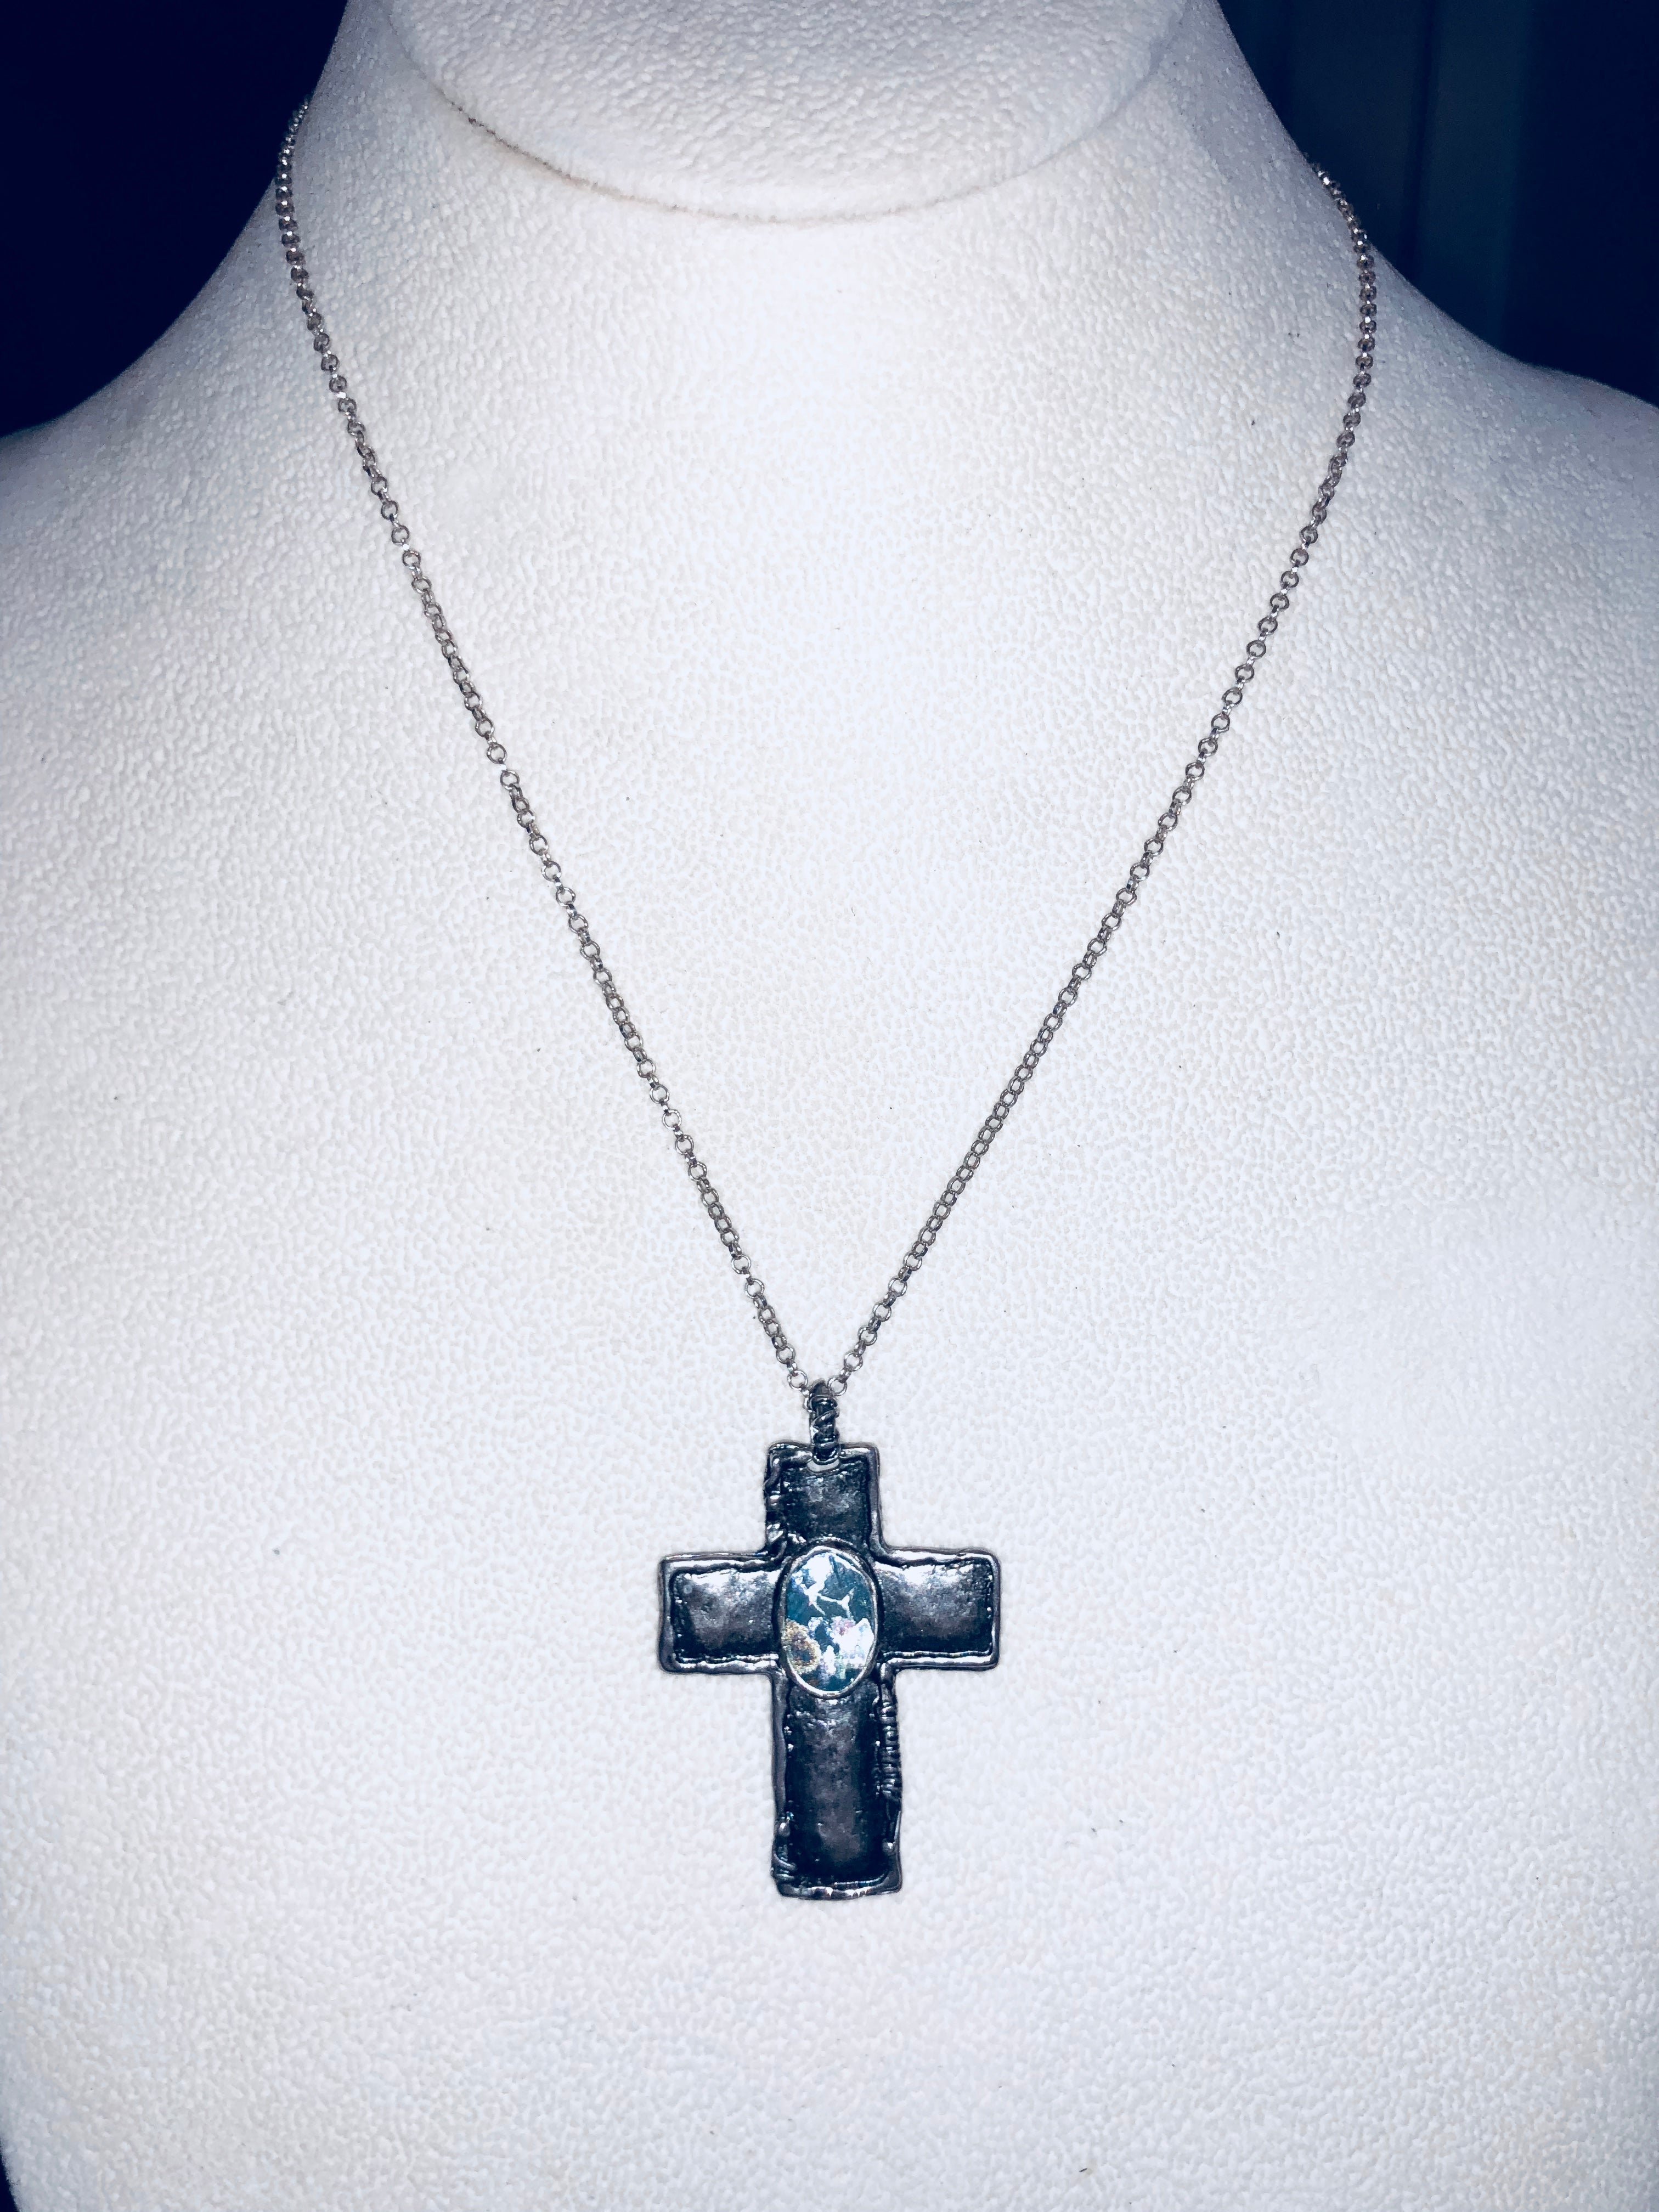 Sterling Silver Roman Glass oxidized cross necklace